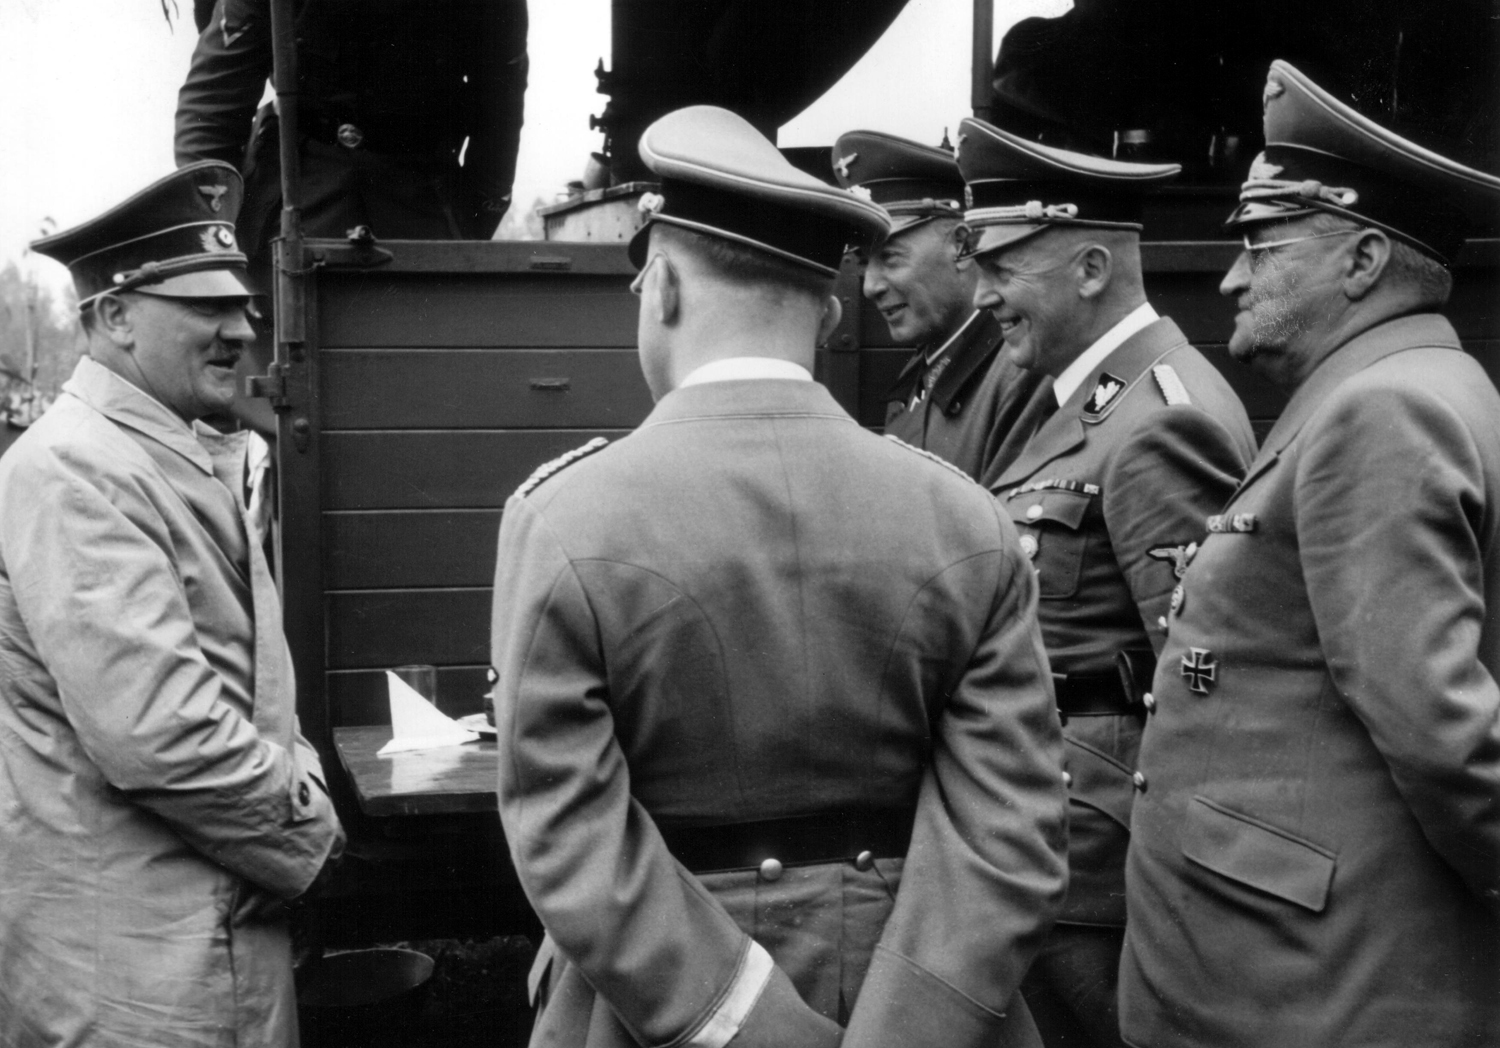 Adolf Hitler in the Vosges region in France